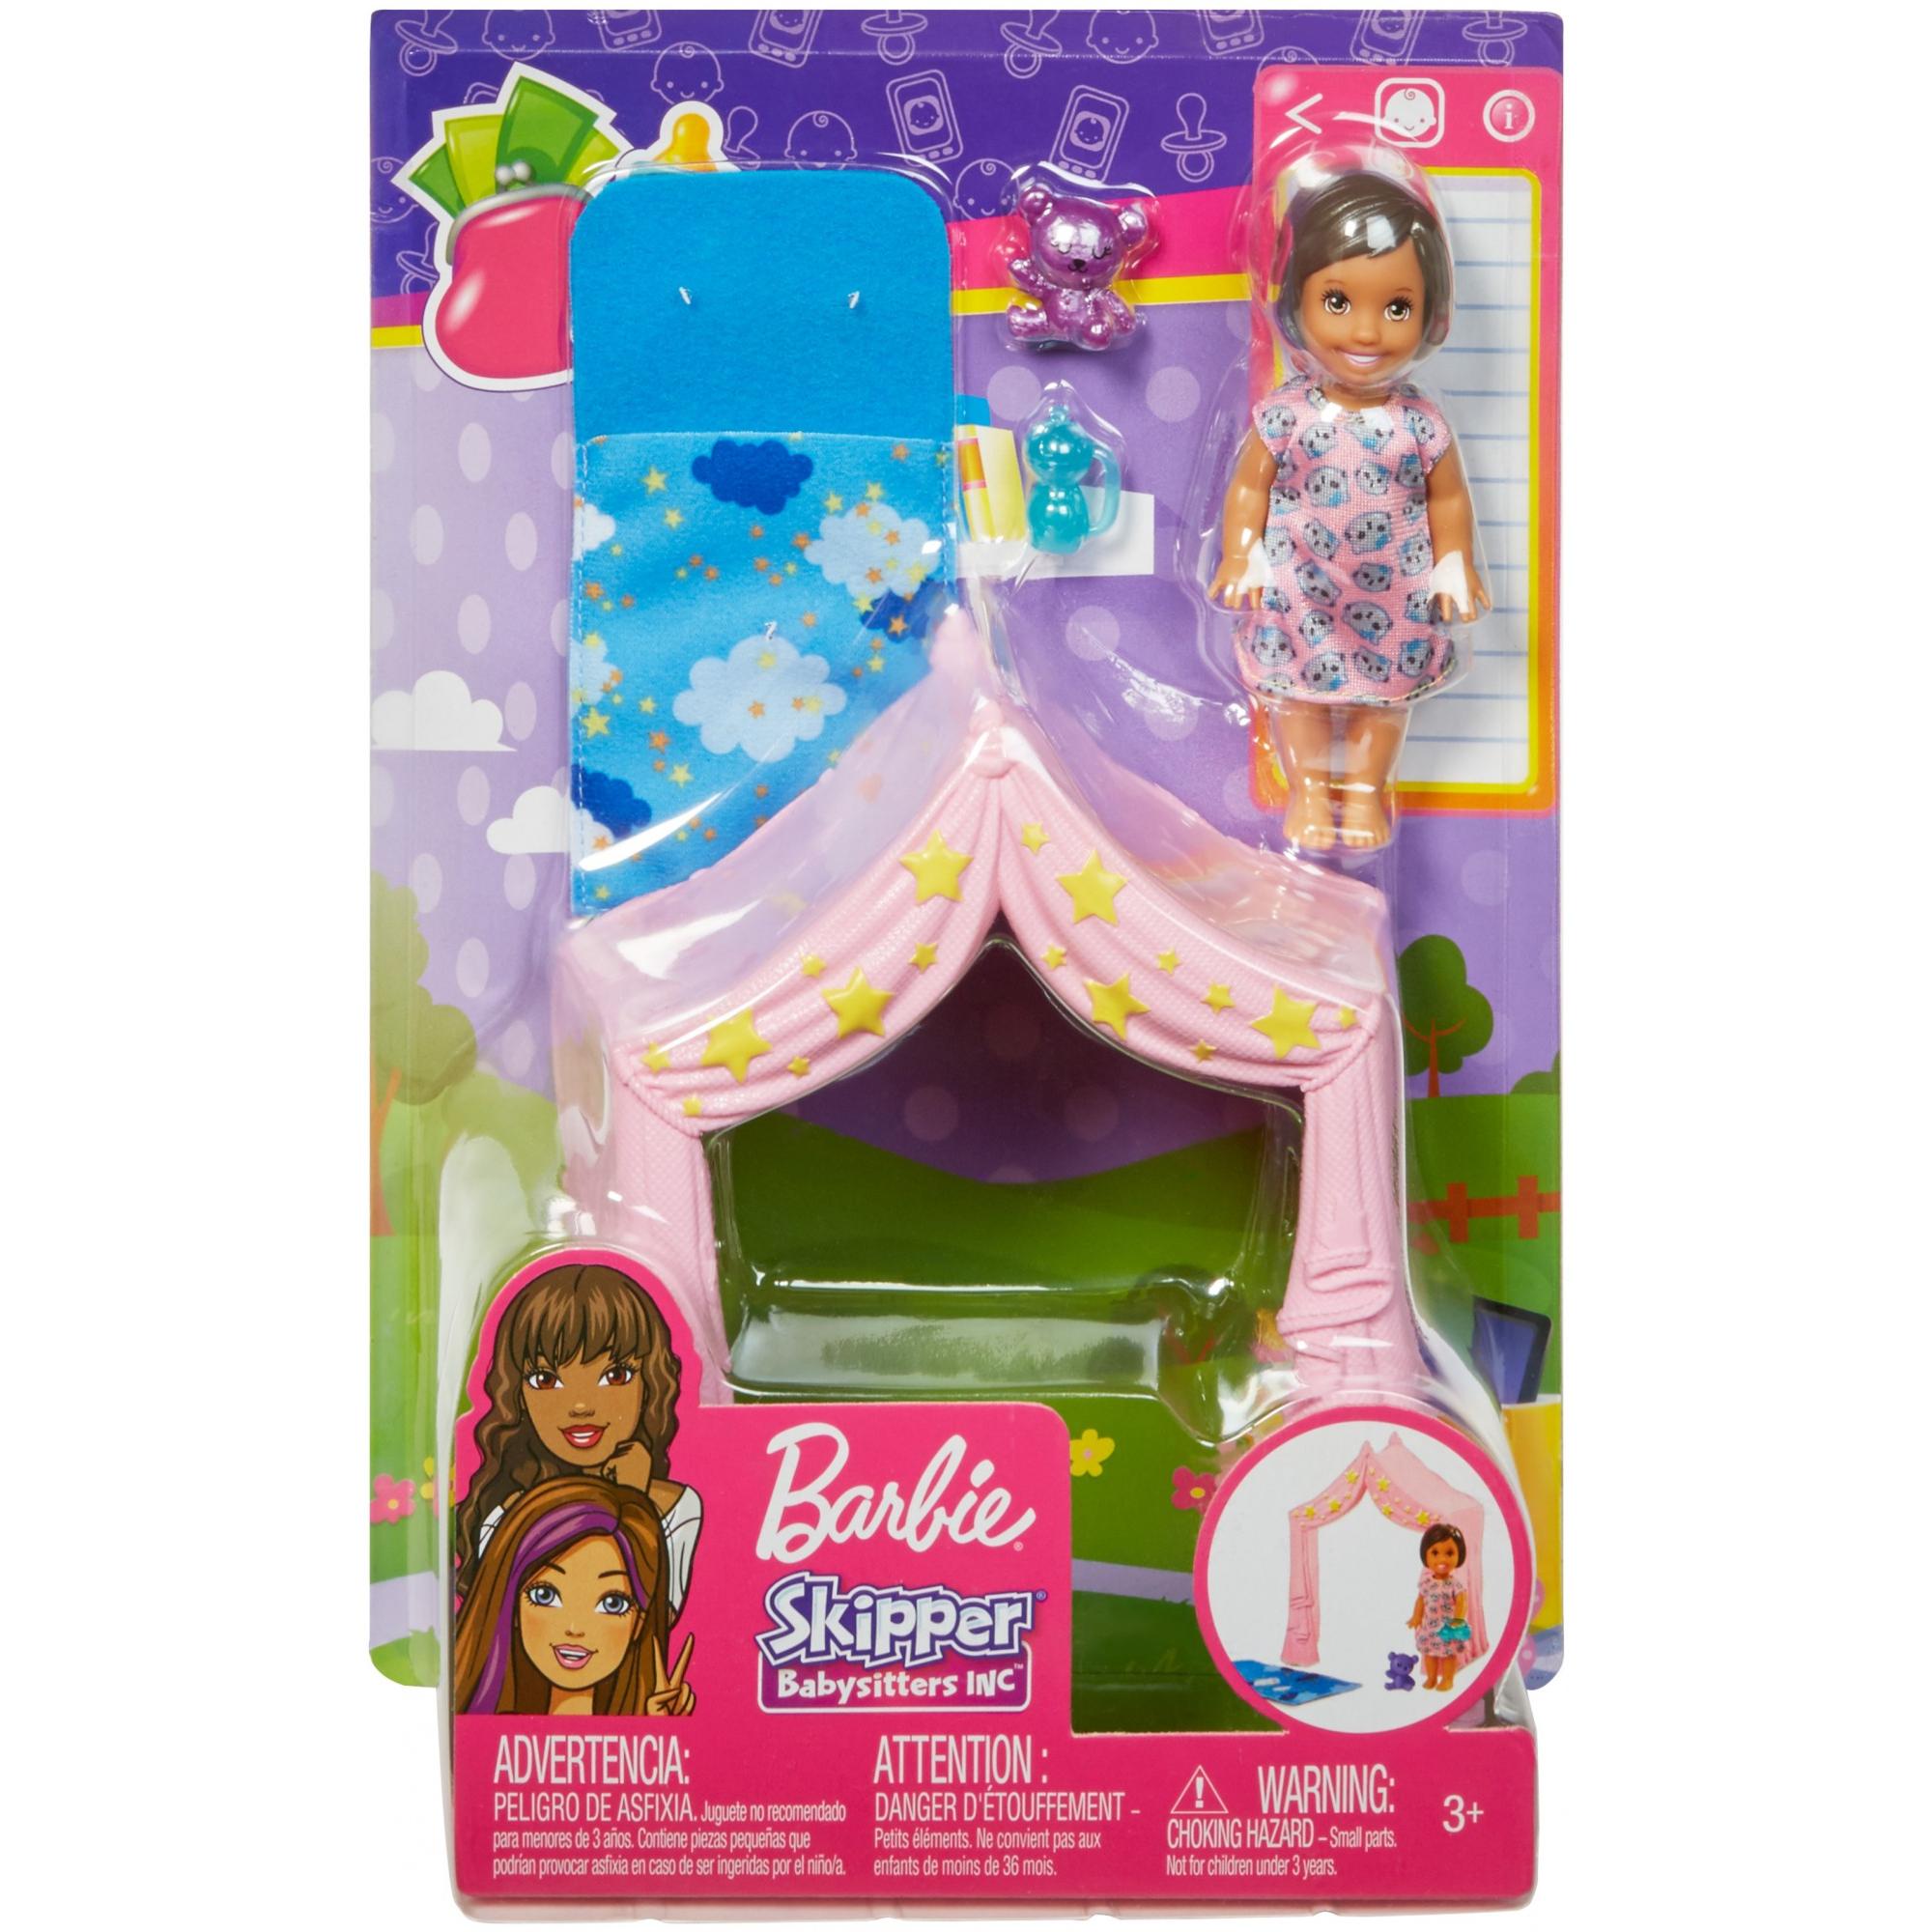 Barbie Skipper Babysitters Inc Doll & Playset - image 5 of 5